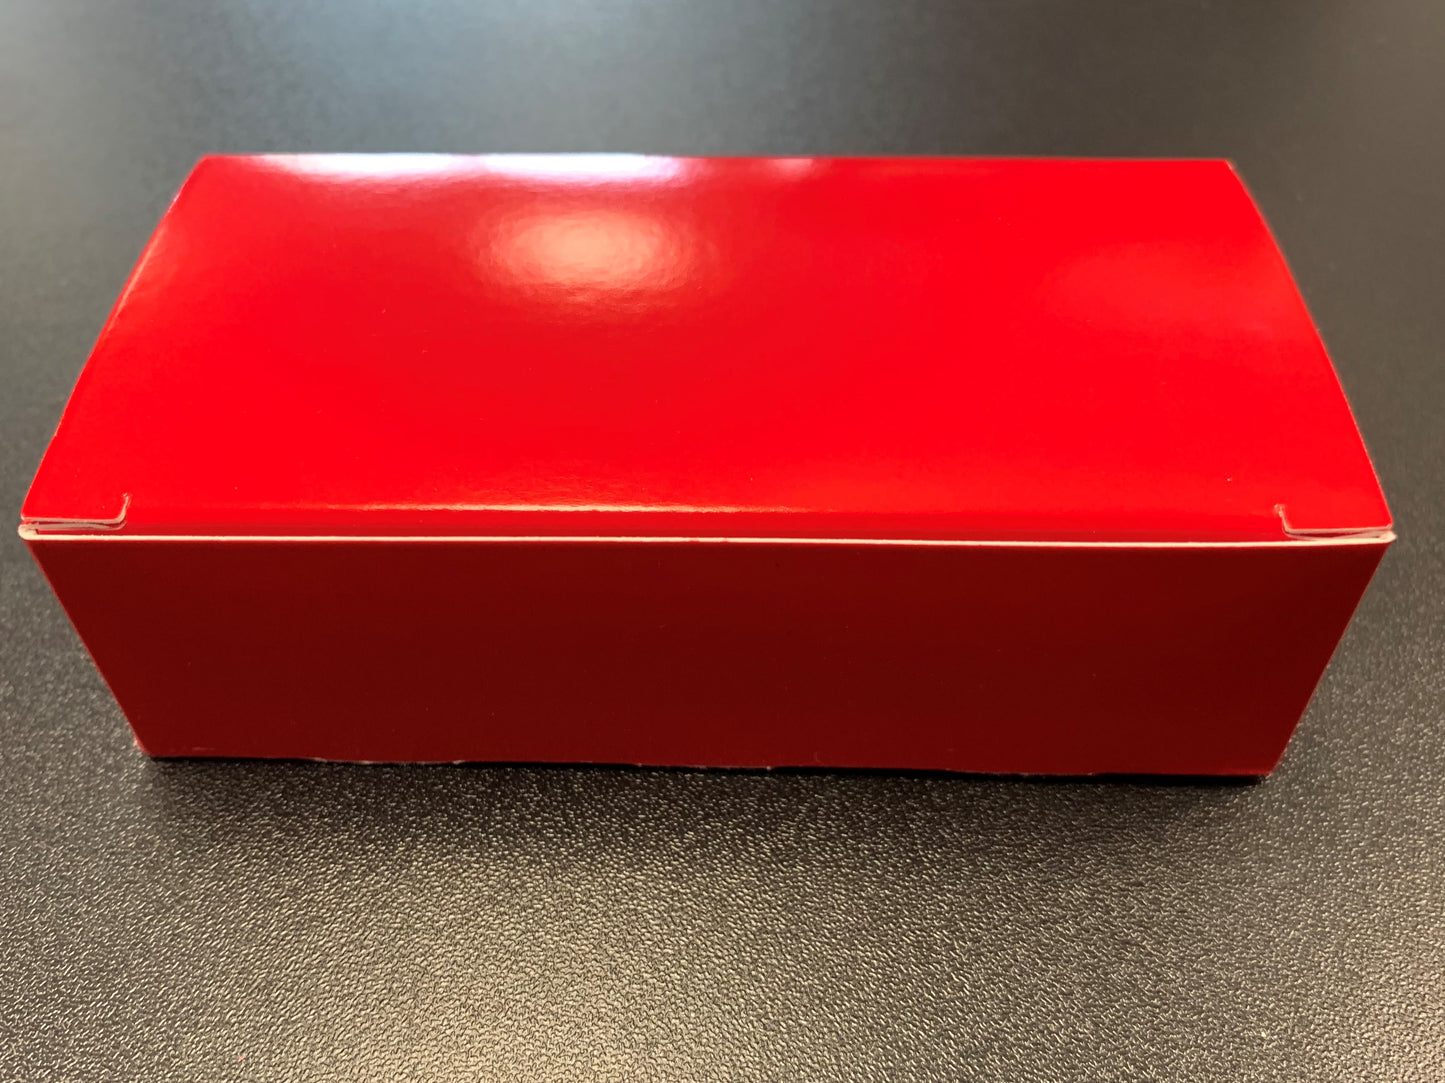 Red Candy Box, Quarter (.25) LB, 1 Piece Folding Box